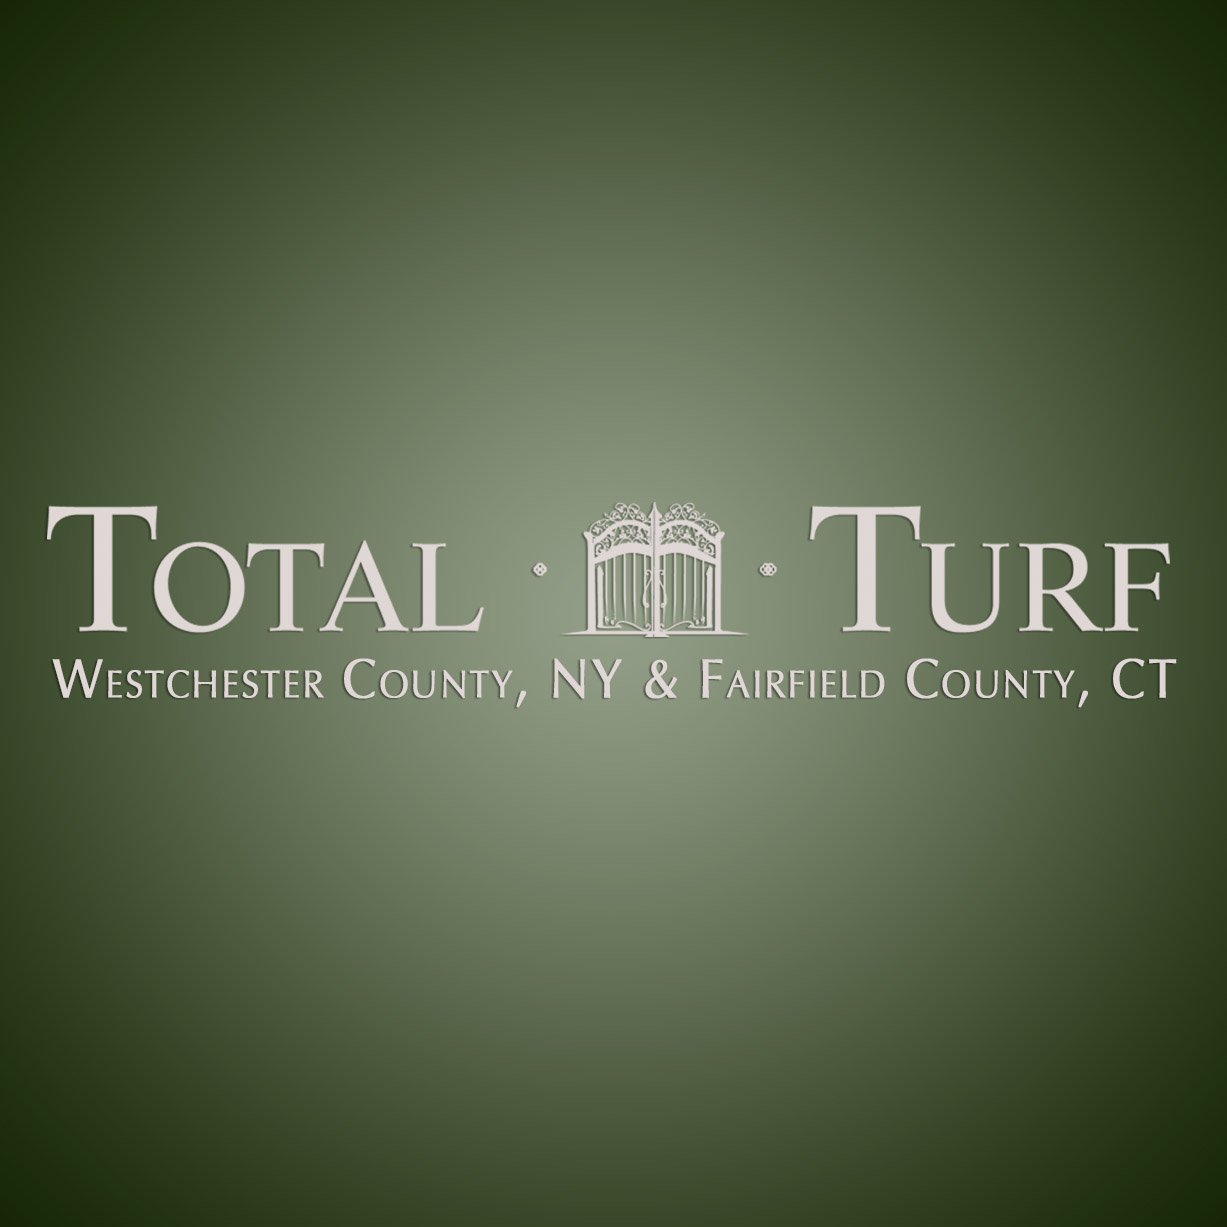 Total Turf logo copy 2.jpg